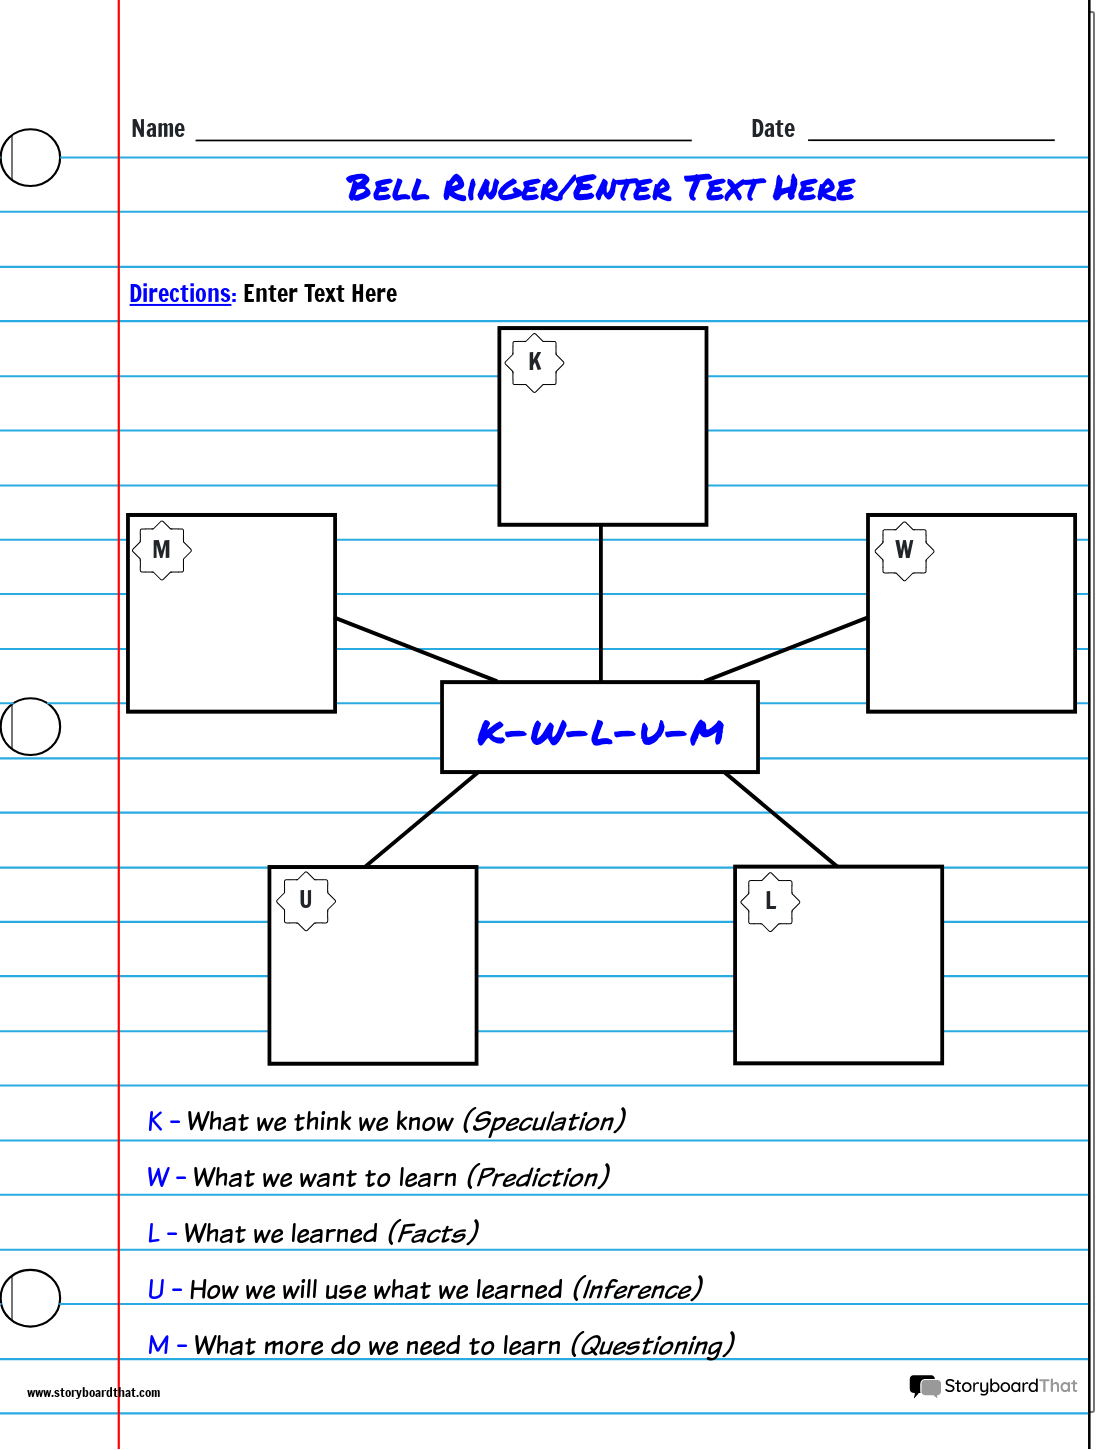 Customizable Notebook Bell Ringer Template